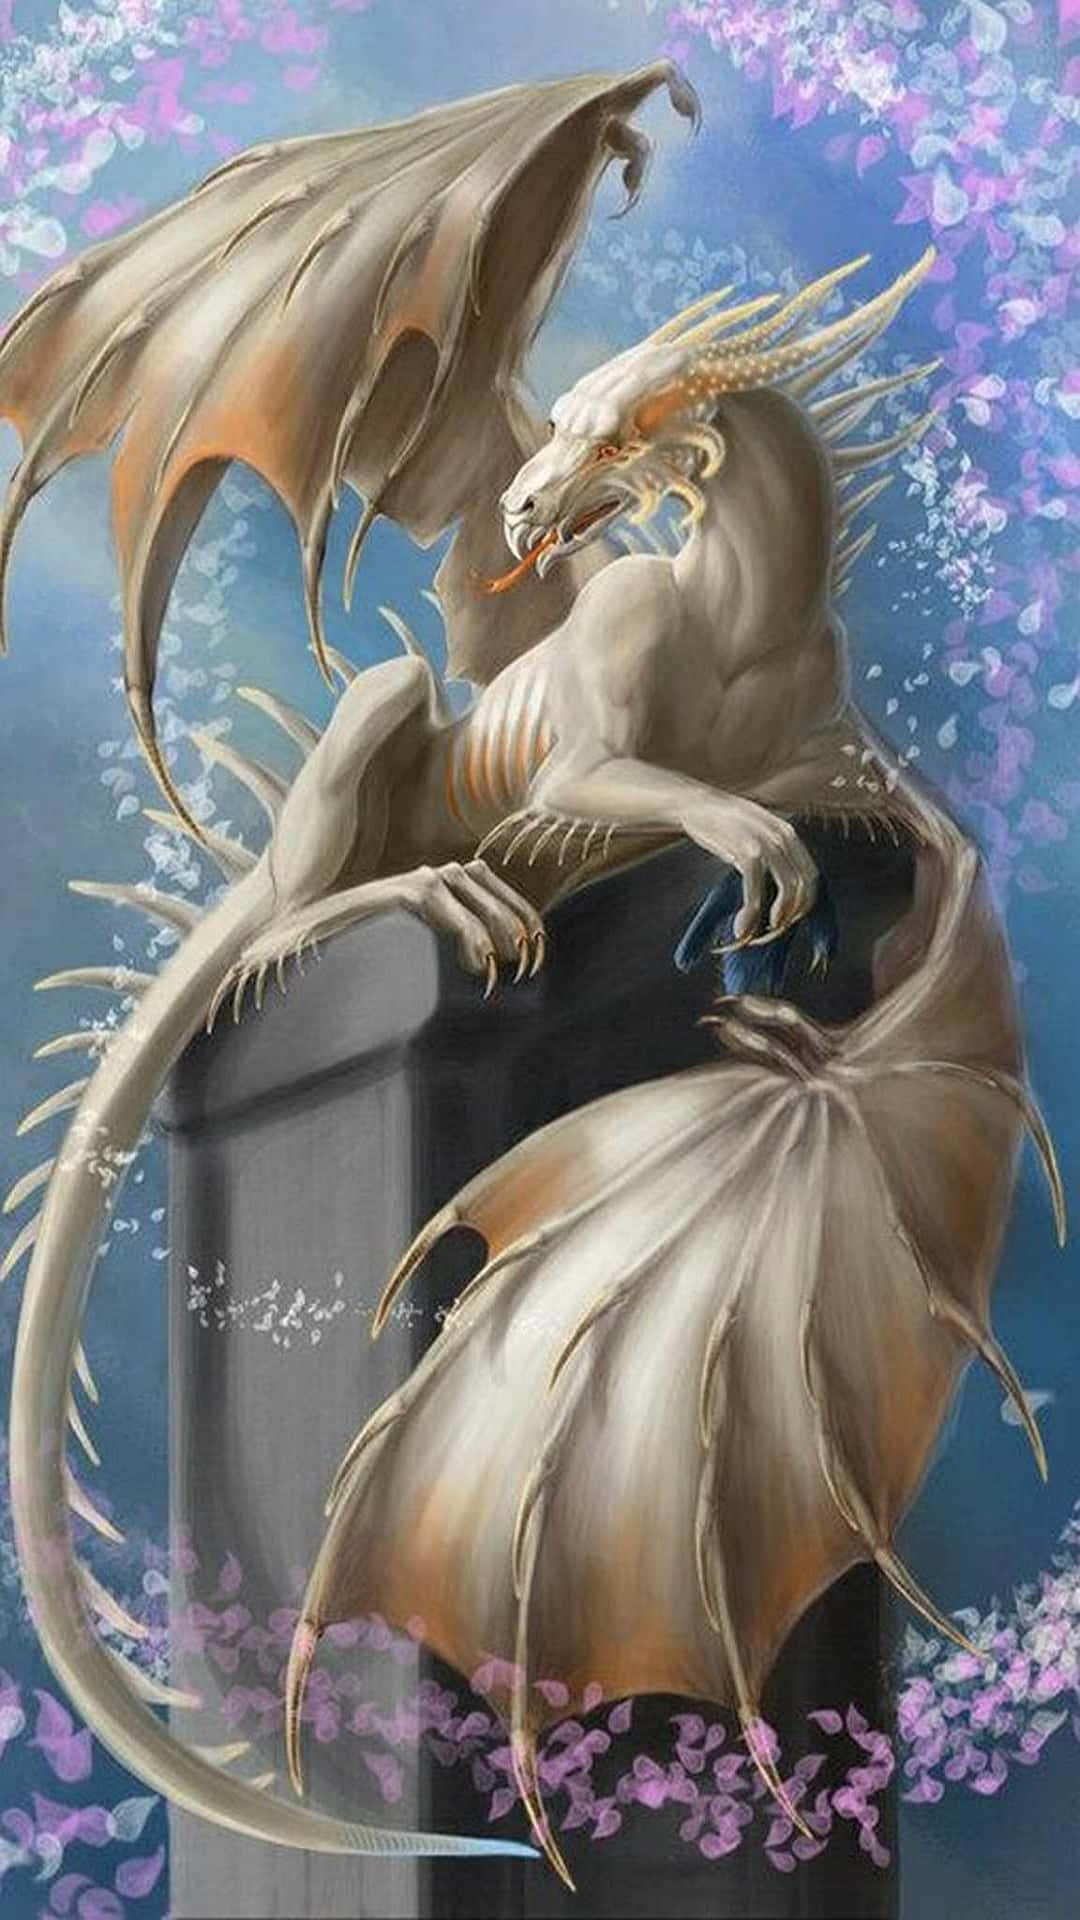 A Mystical Dragon Takes Flight Wallpaper